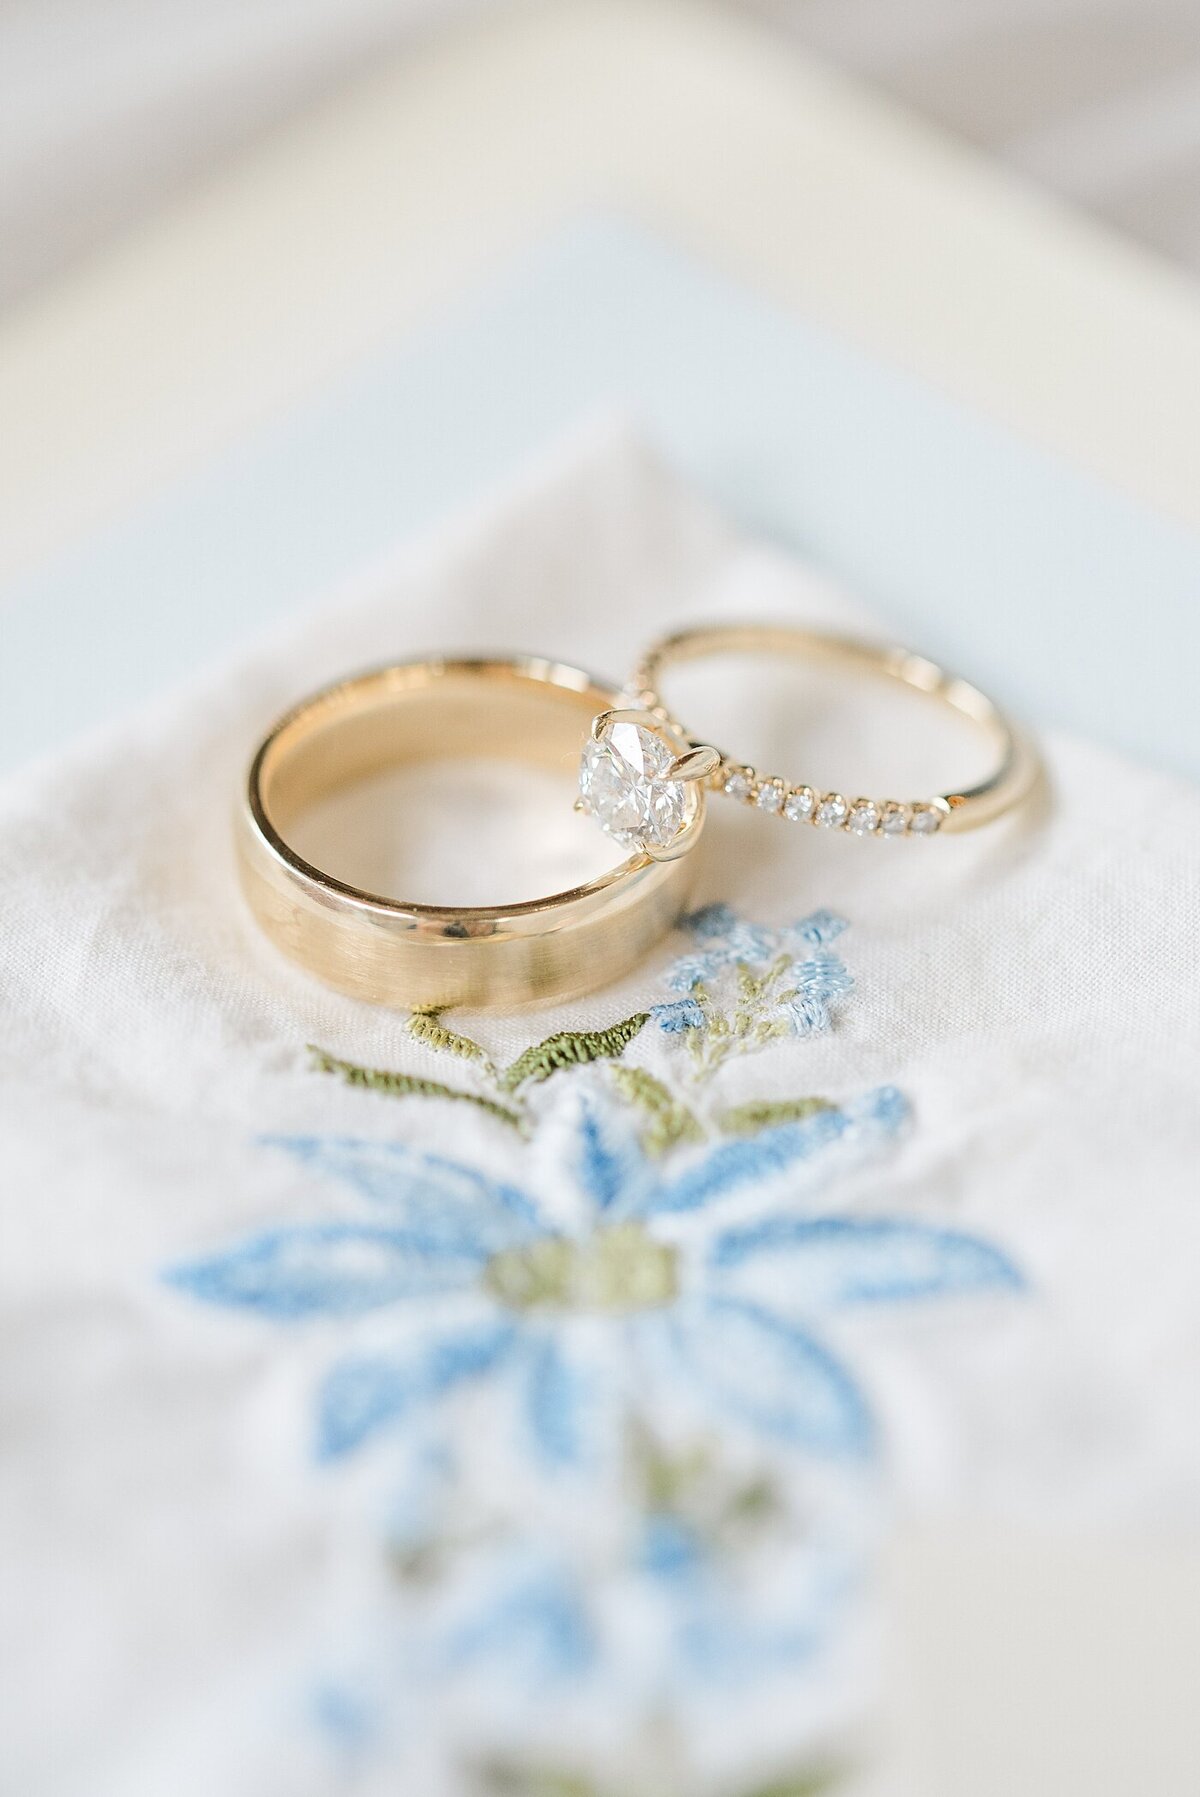 Bride and groom rings on family heirloom